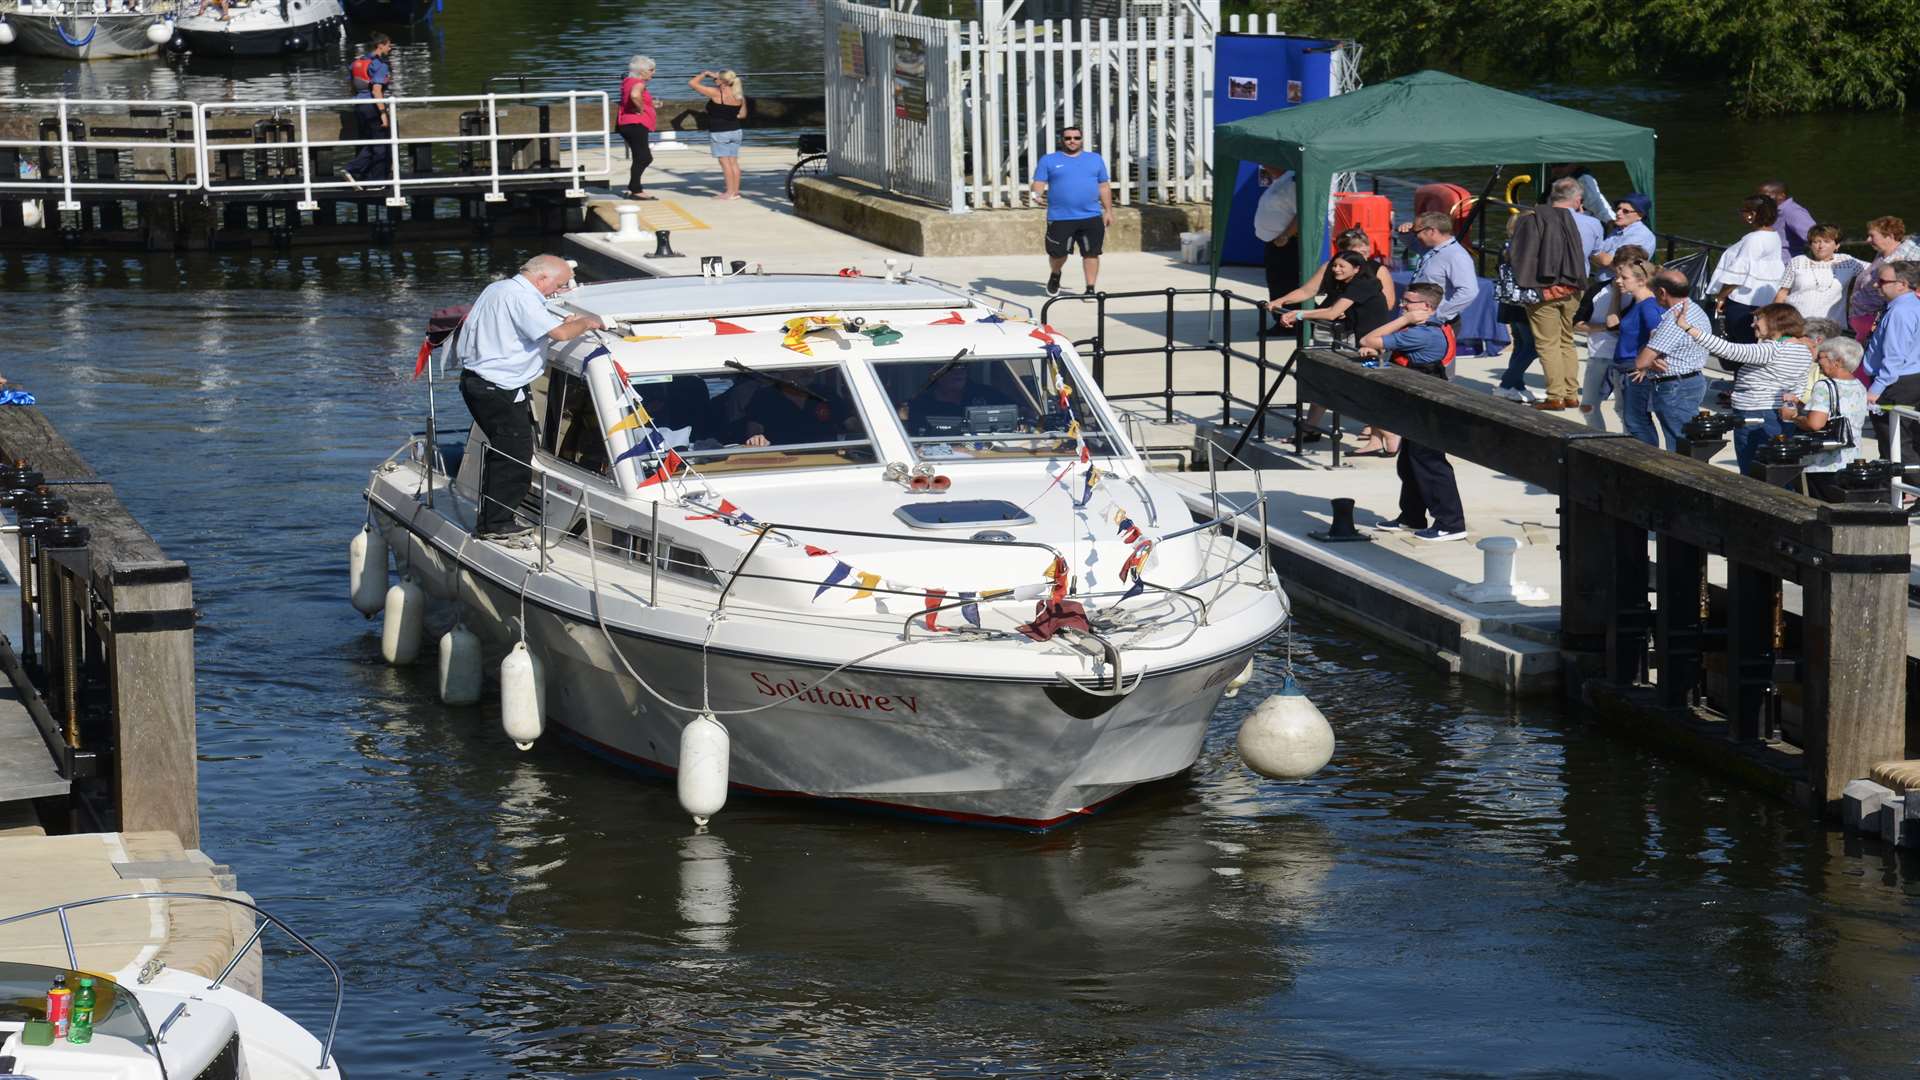 The Mayor of Maidstone's flotilla passes through the new lock